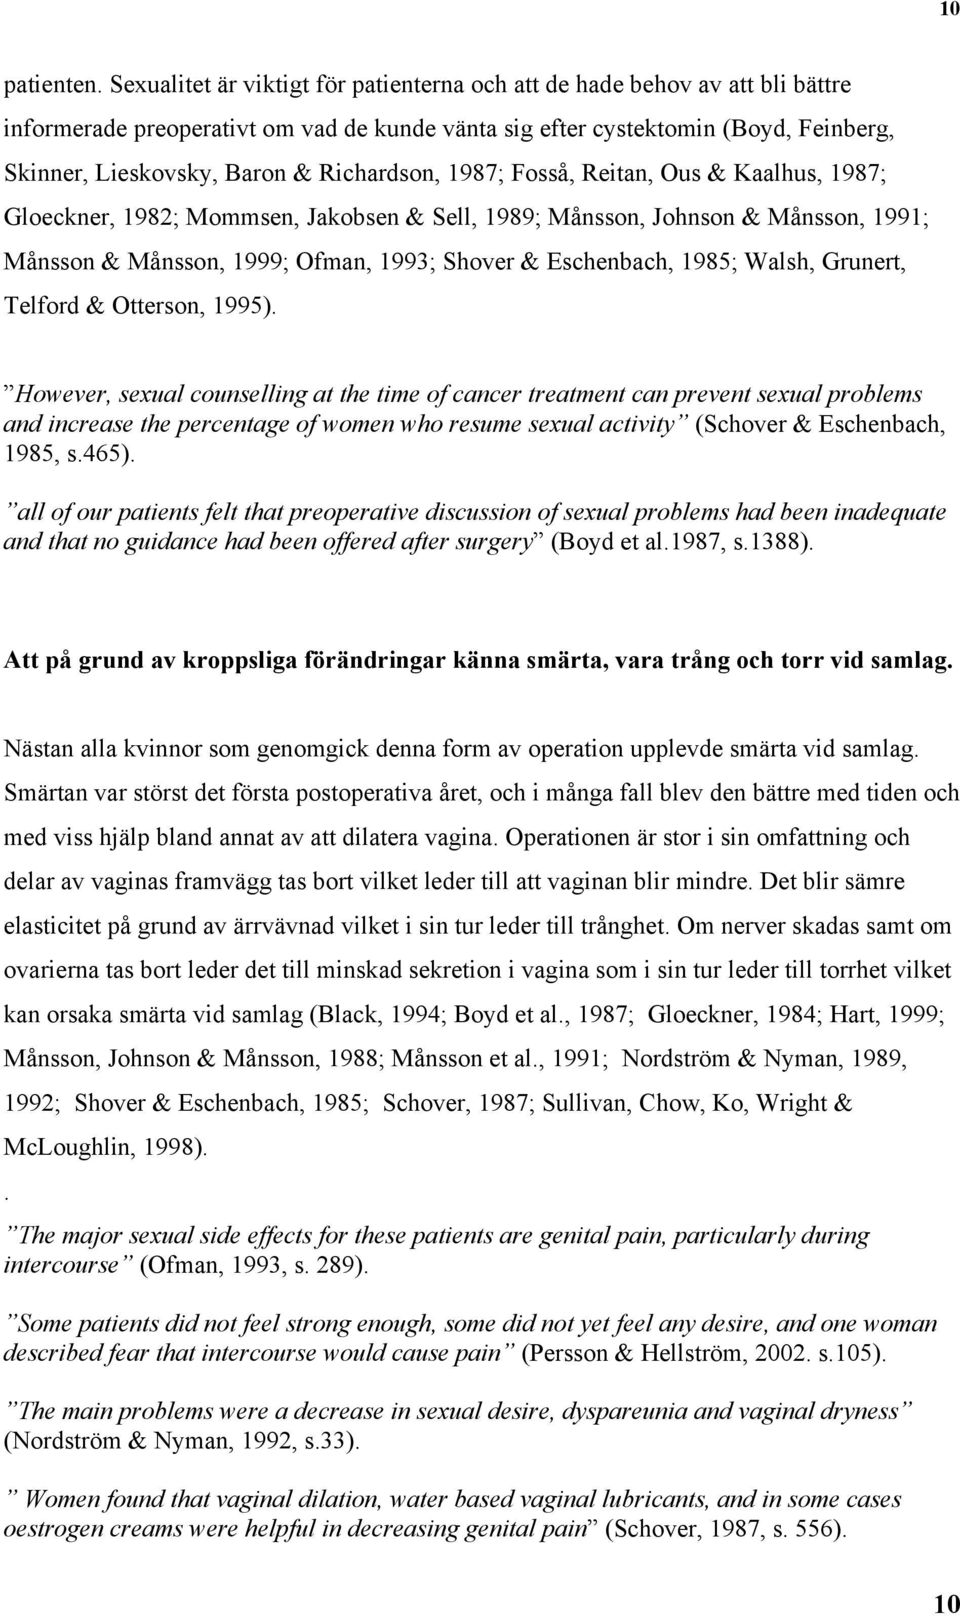 Richardson, 1987; Fosså, Reitan, Ous & Kaalhus, 1987; Gloeckner, 1982; Mommsen, Jakobsen & Sell, 1989; Månsson, Johnson & Månsson, 1991; Månsson & Månsson, 1999; Ofman, 1993; Shover & Eschenbach,